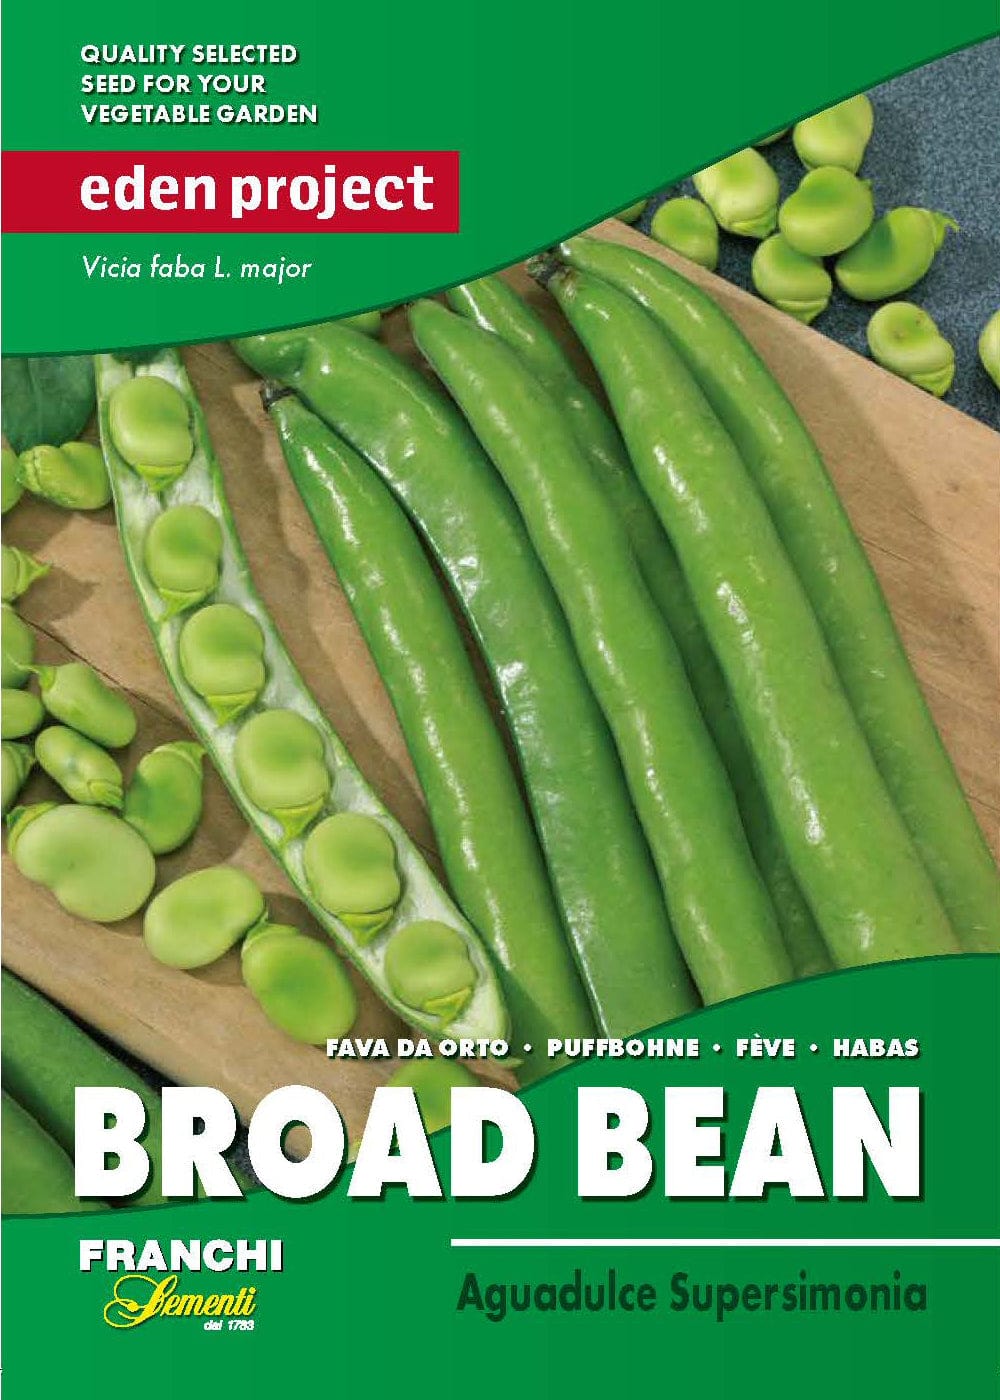 Eden broad bean seeds